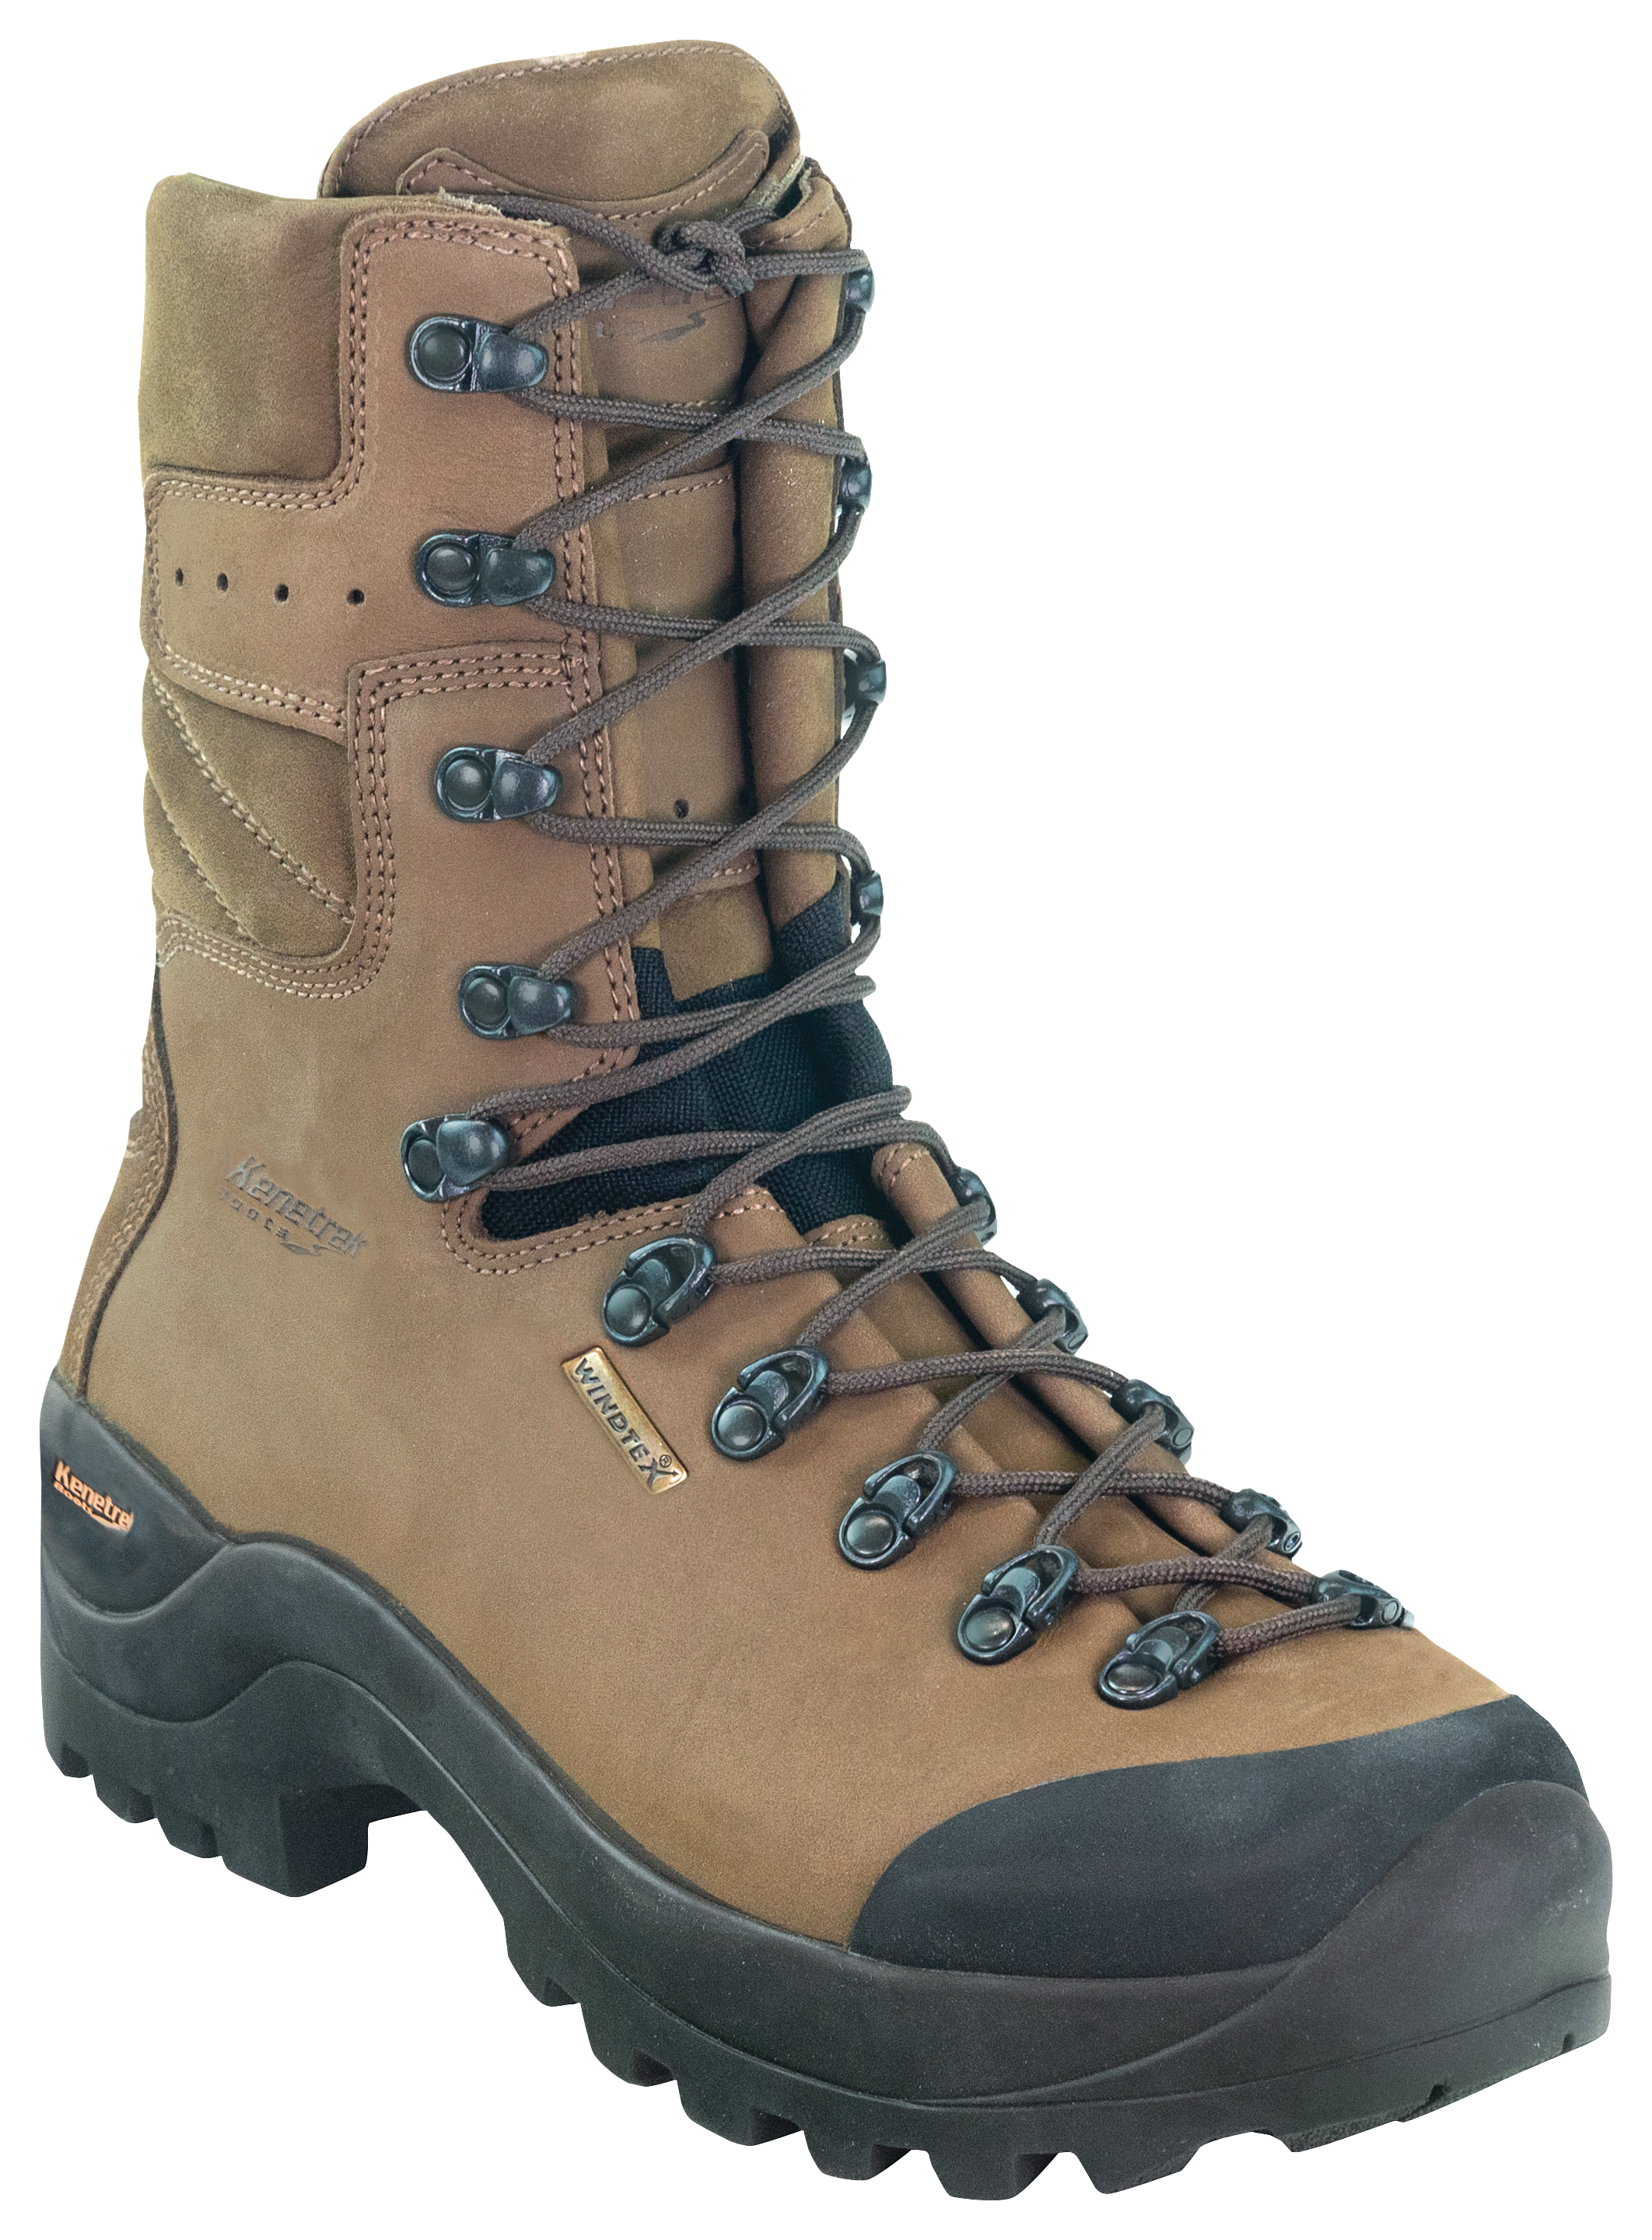 Kenetrek Mountain Guide Waterproof Hunting Boots for Men - Brown - 11M